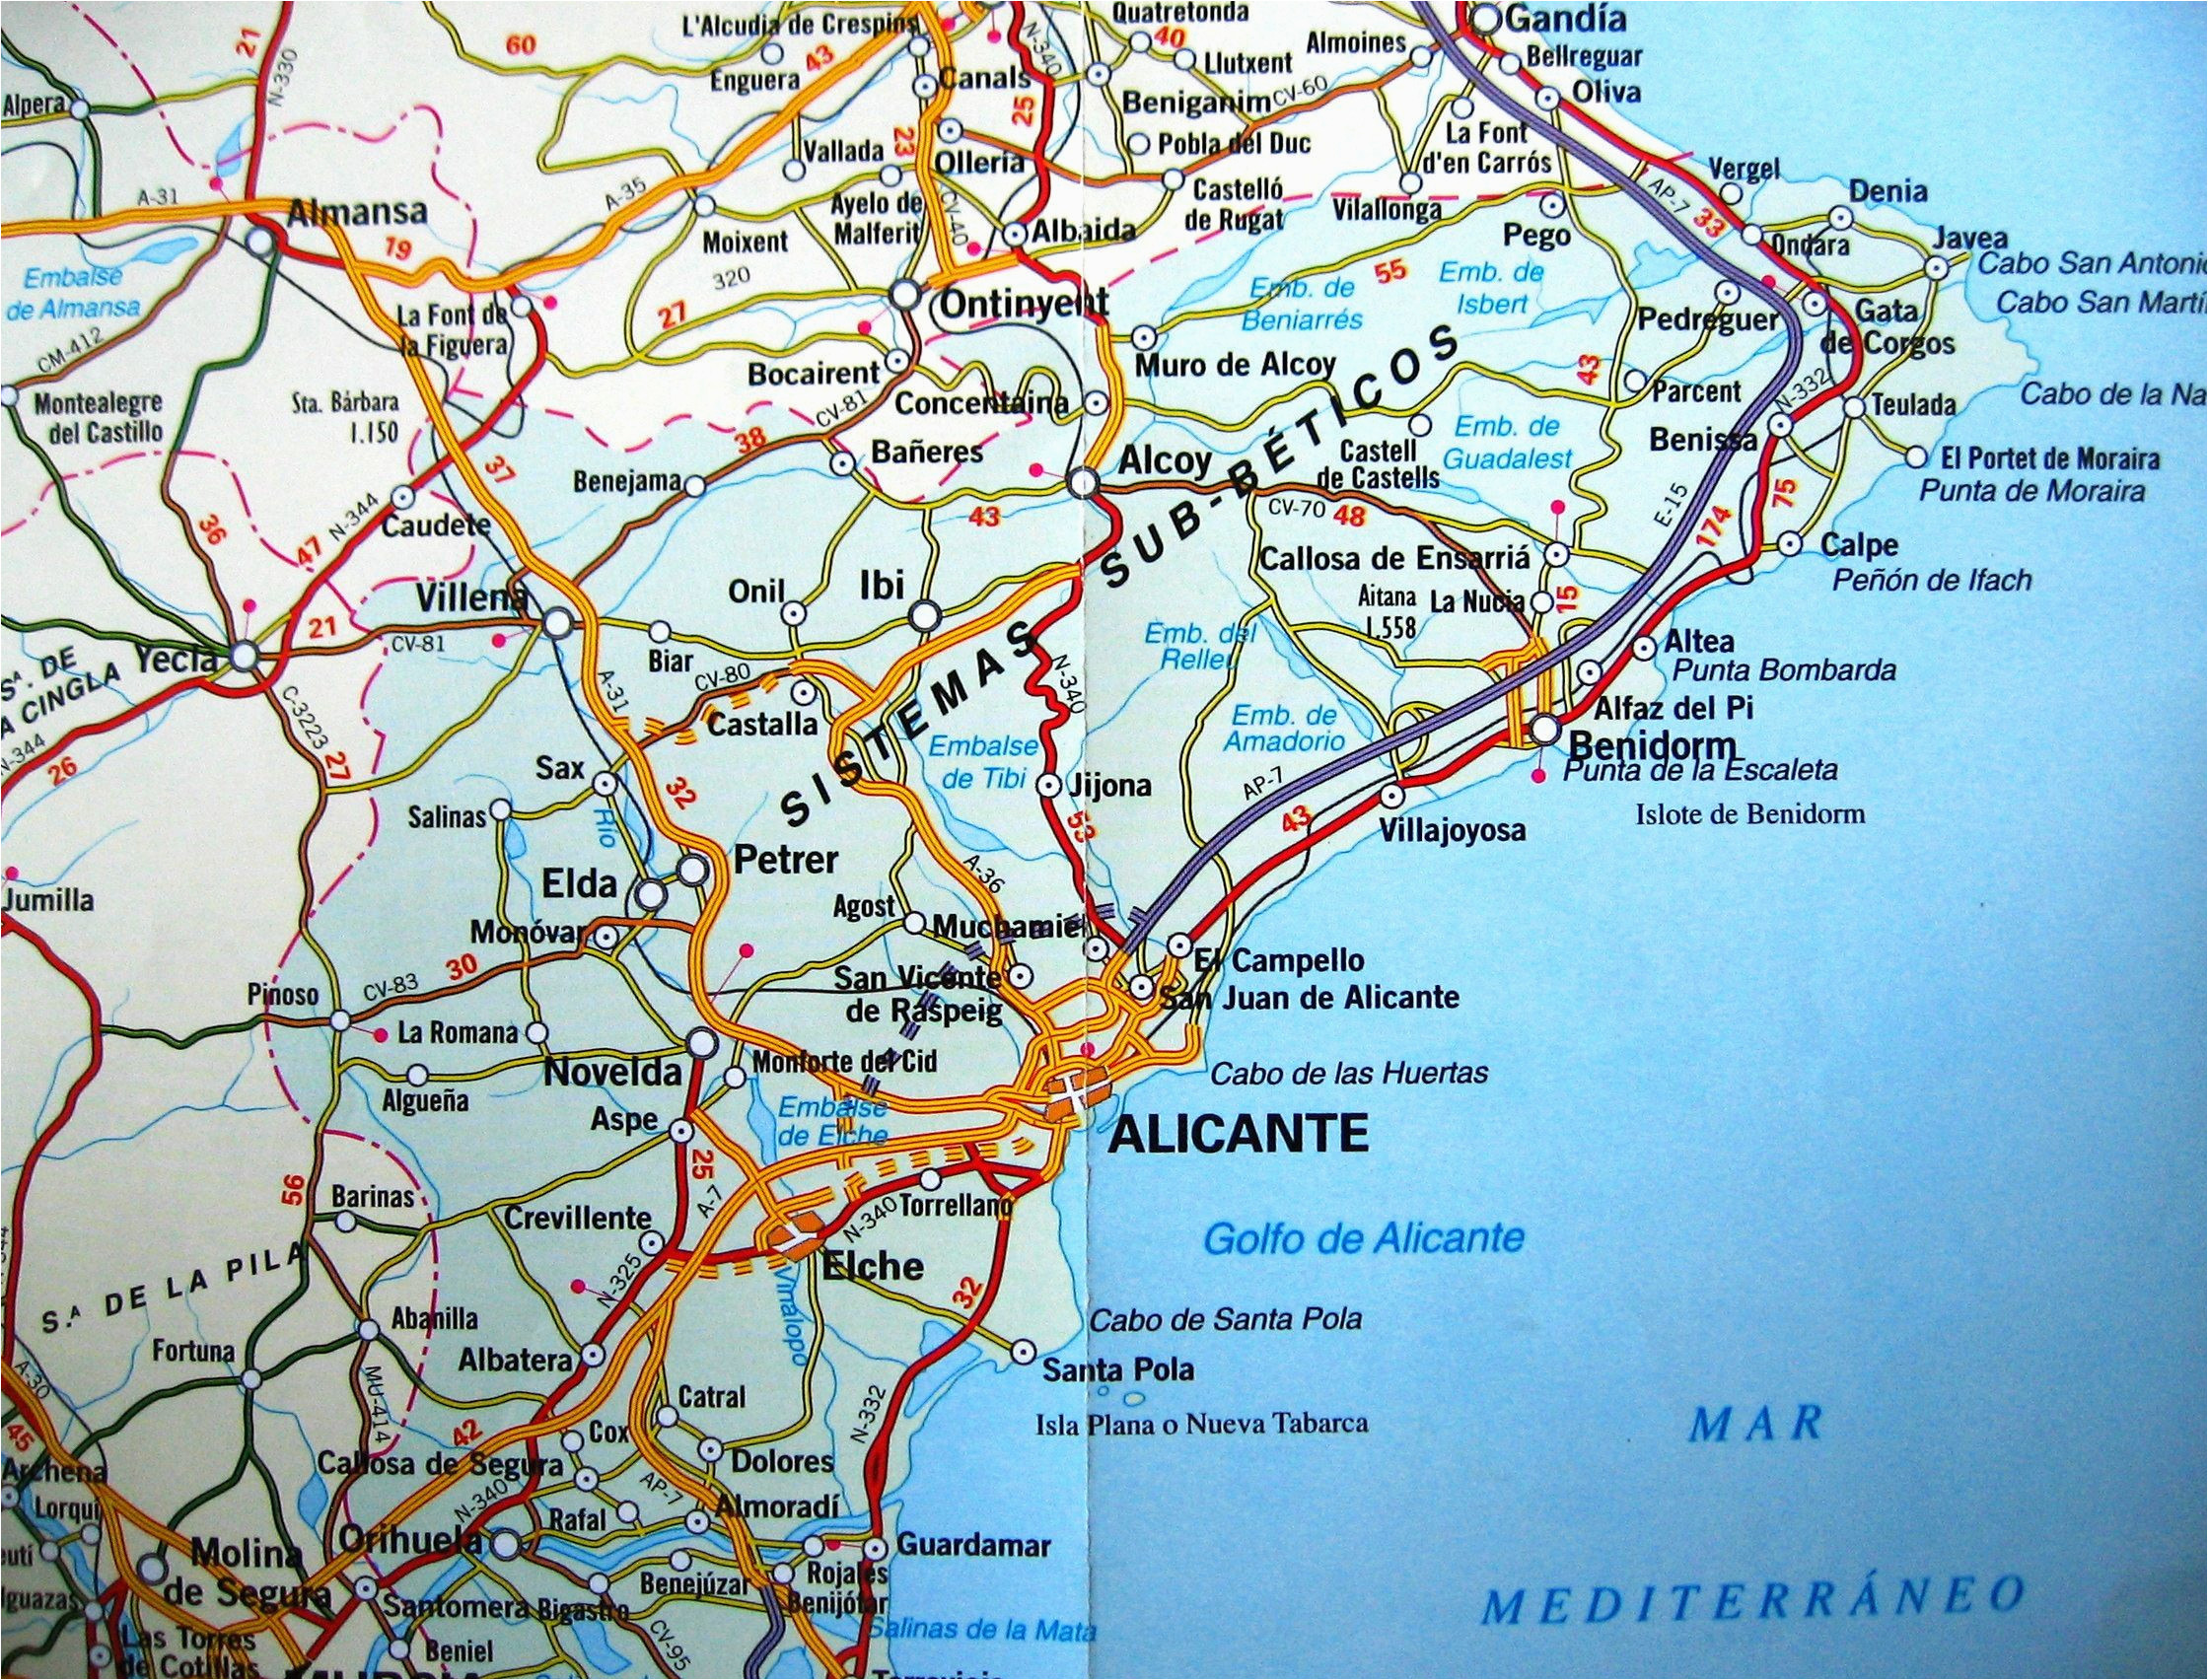 benidorm spain map map of west